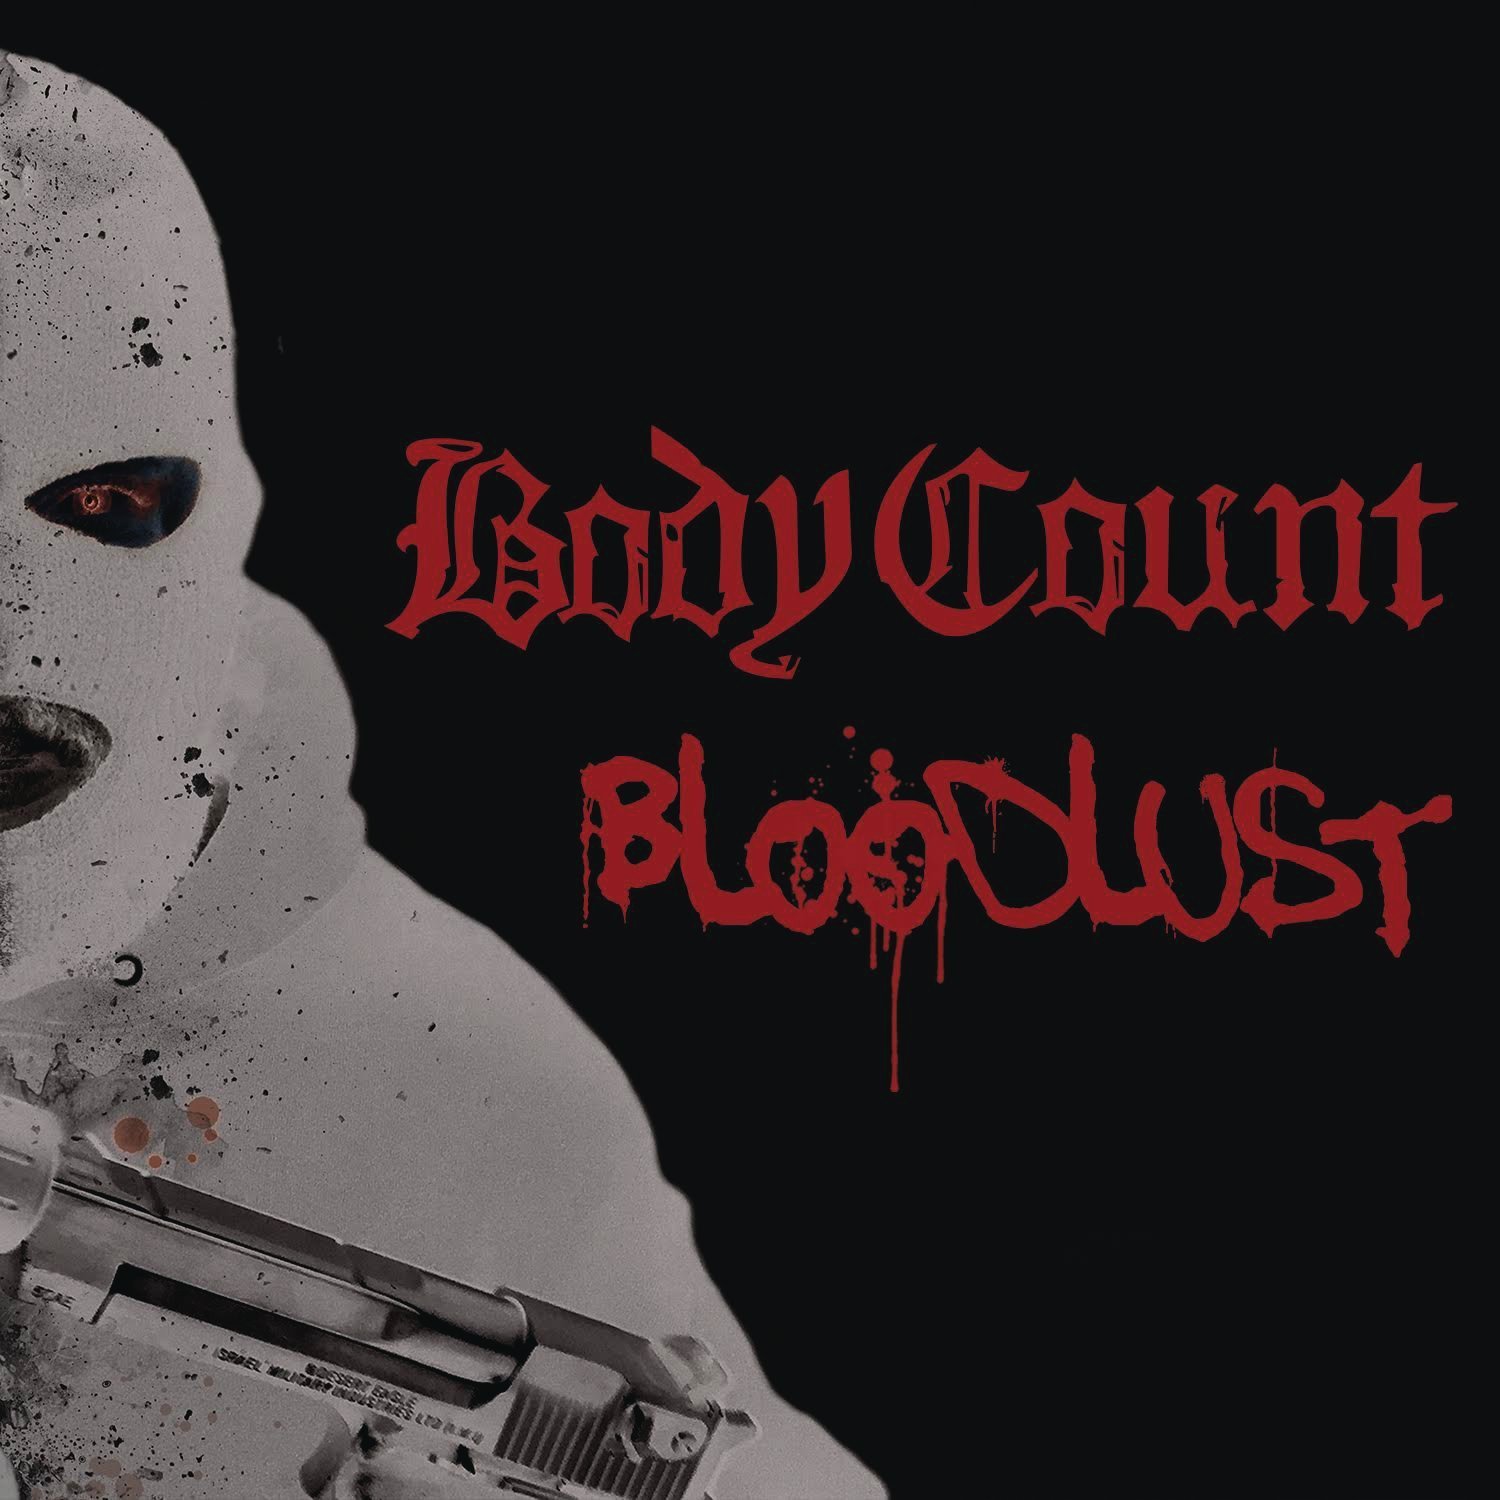 Body Count Bloodlust Vinyl Lp New Sealed Ebay